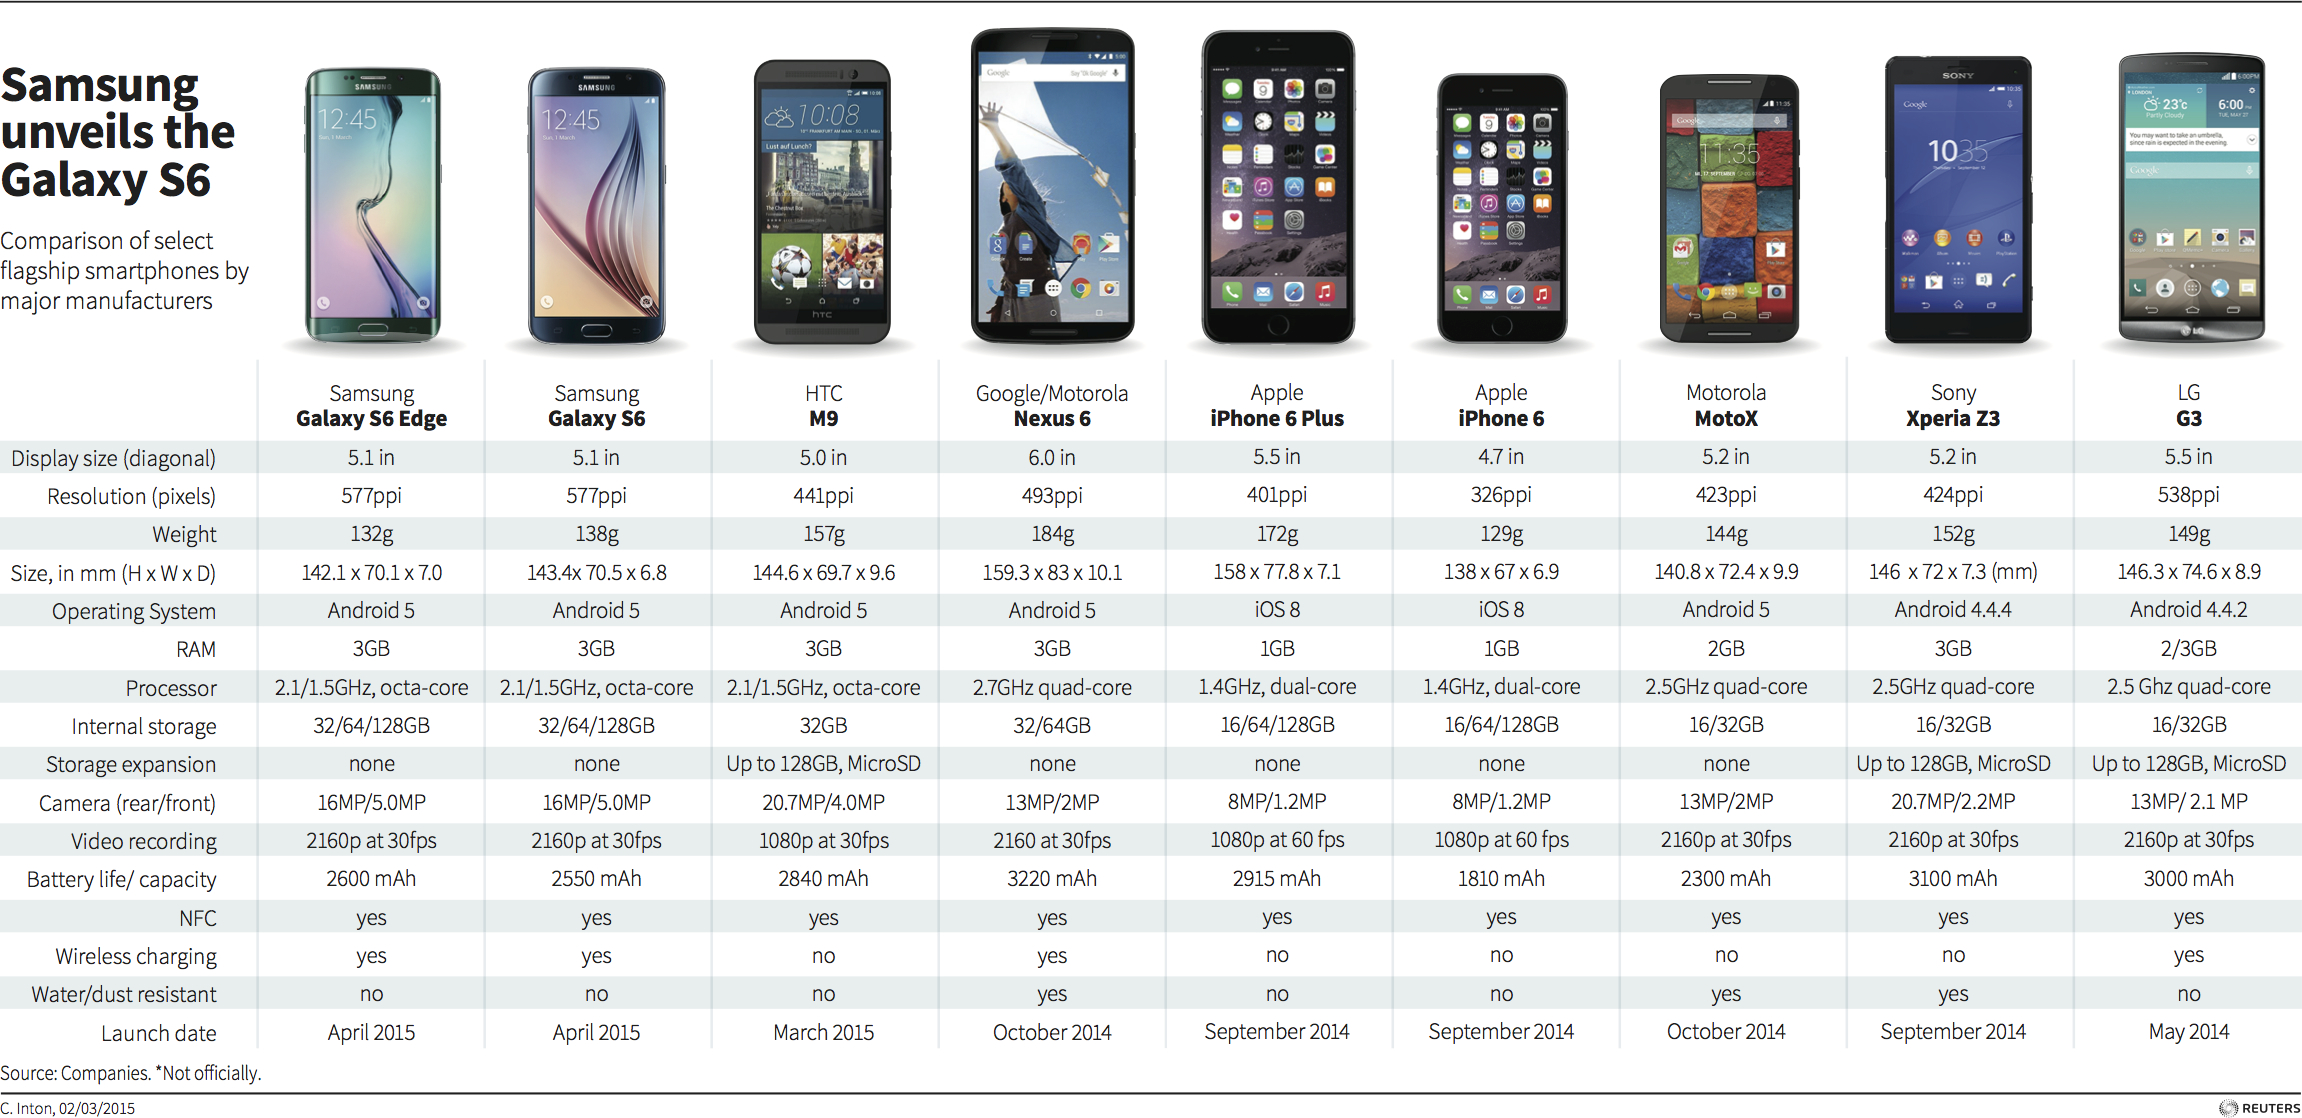 phone size comparison